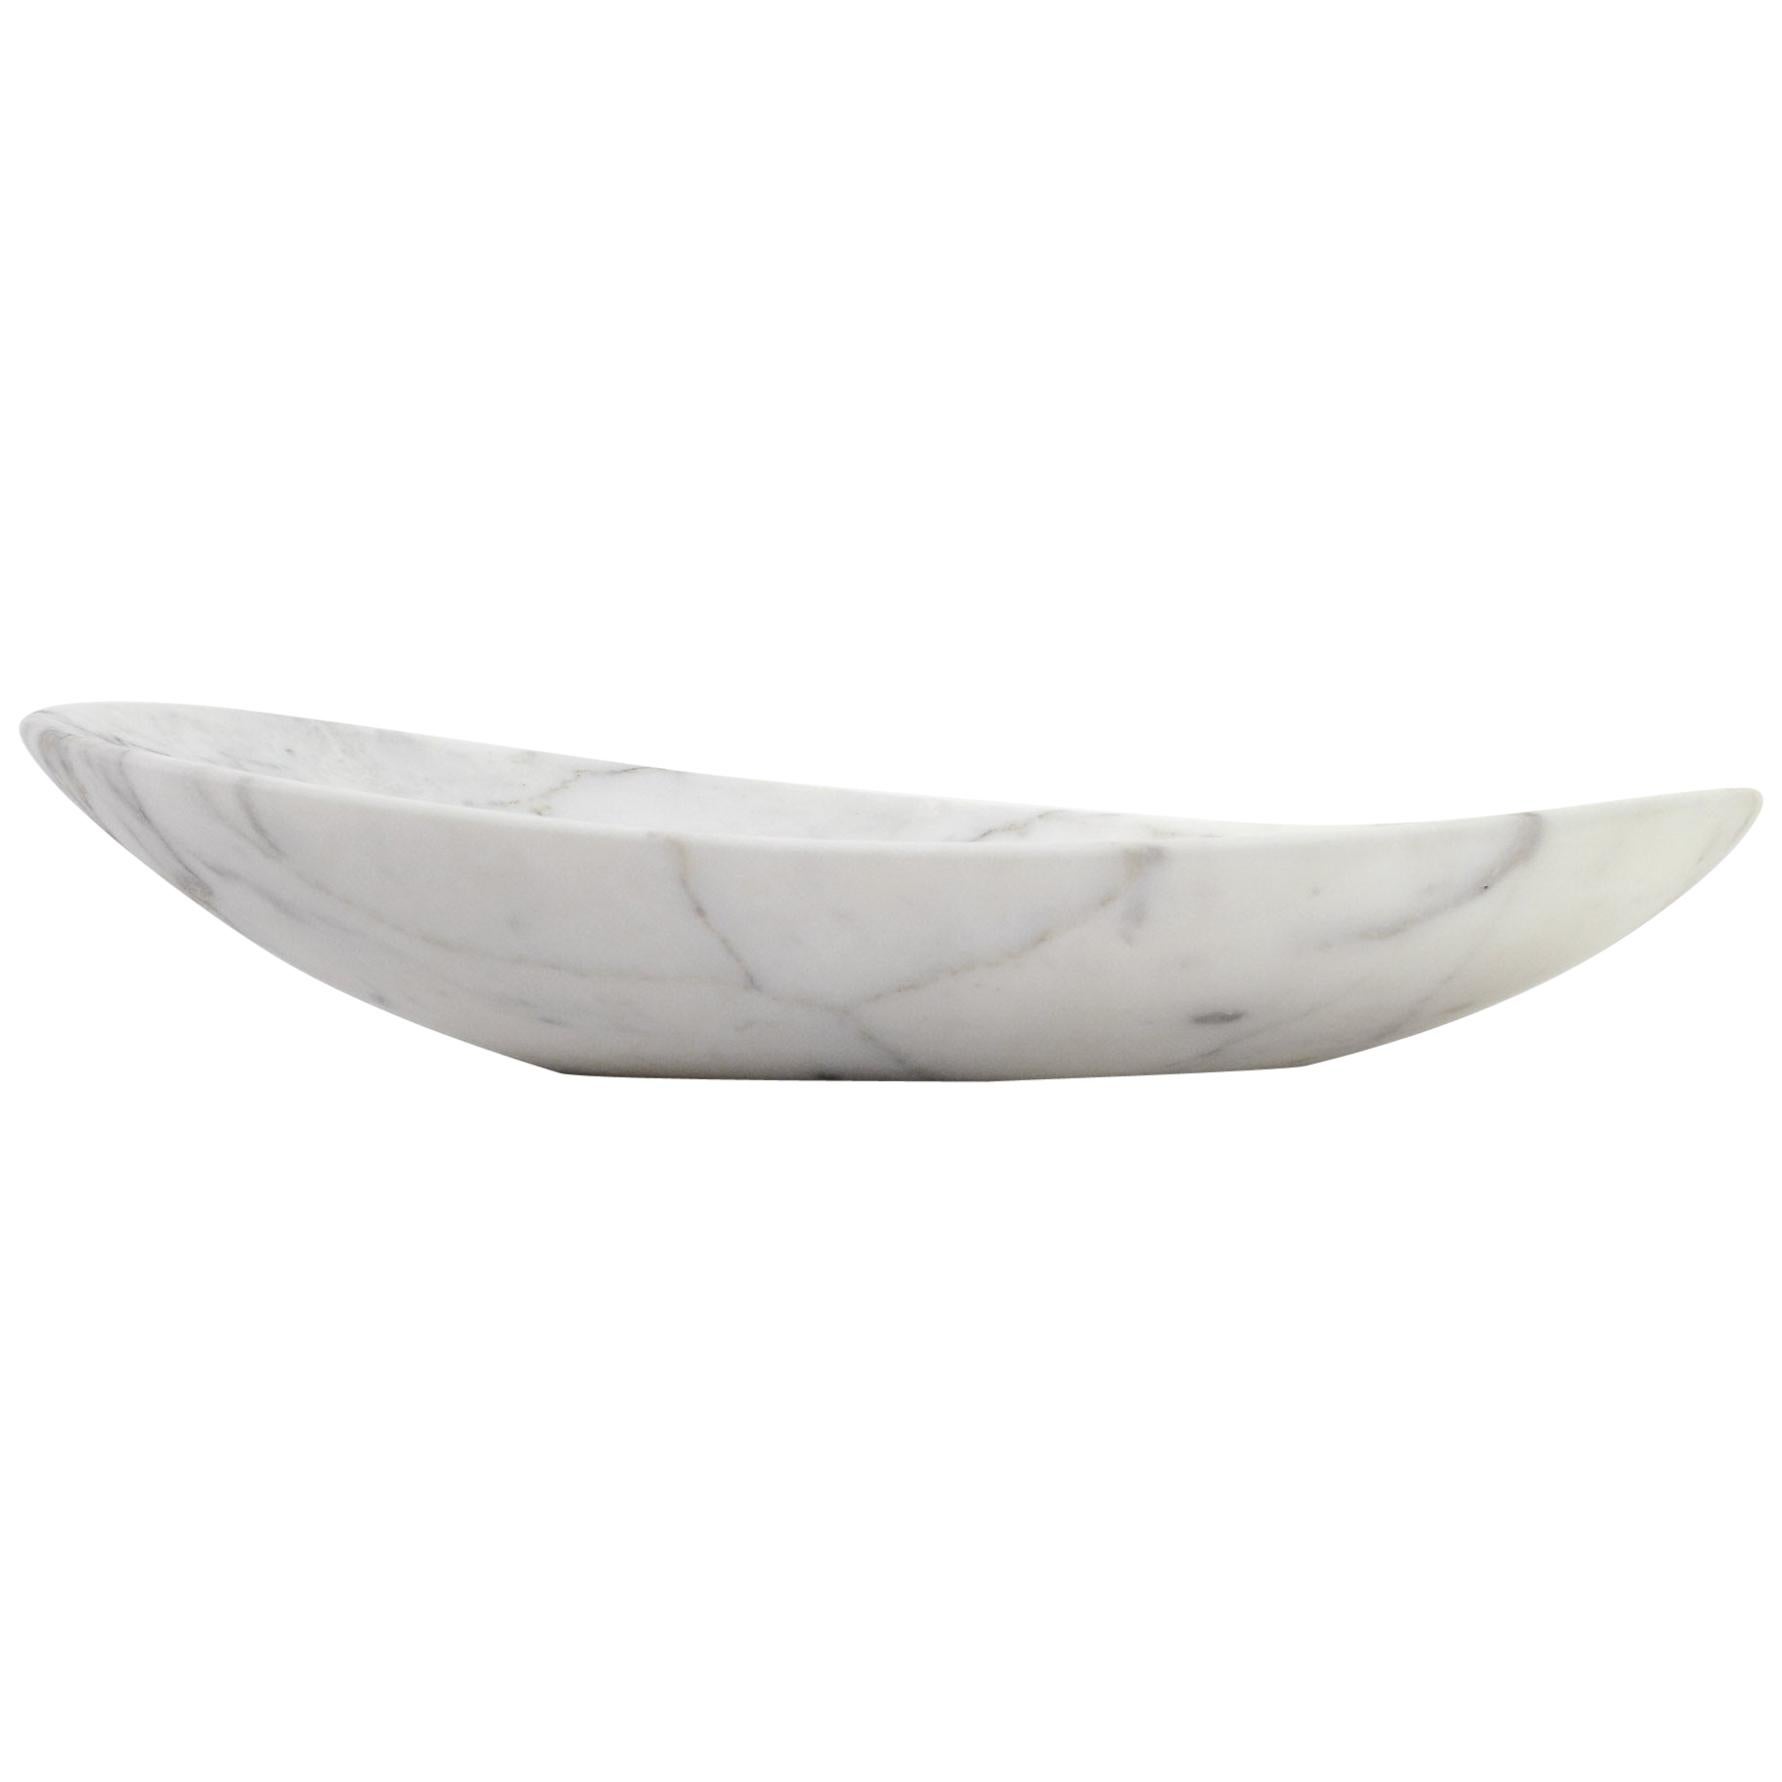 Bowl Vase Centerpiece Serveware Block White Calacatta Marble Hand-carved Italy